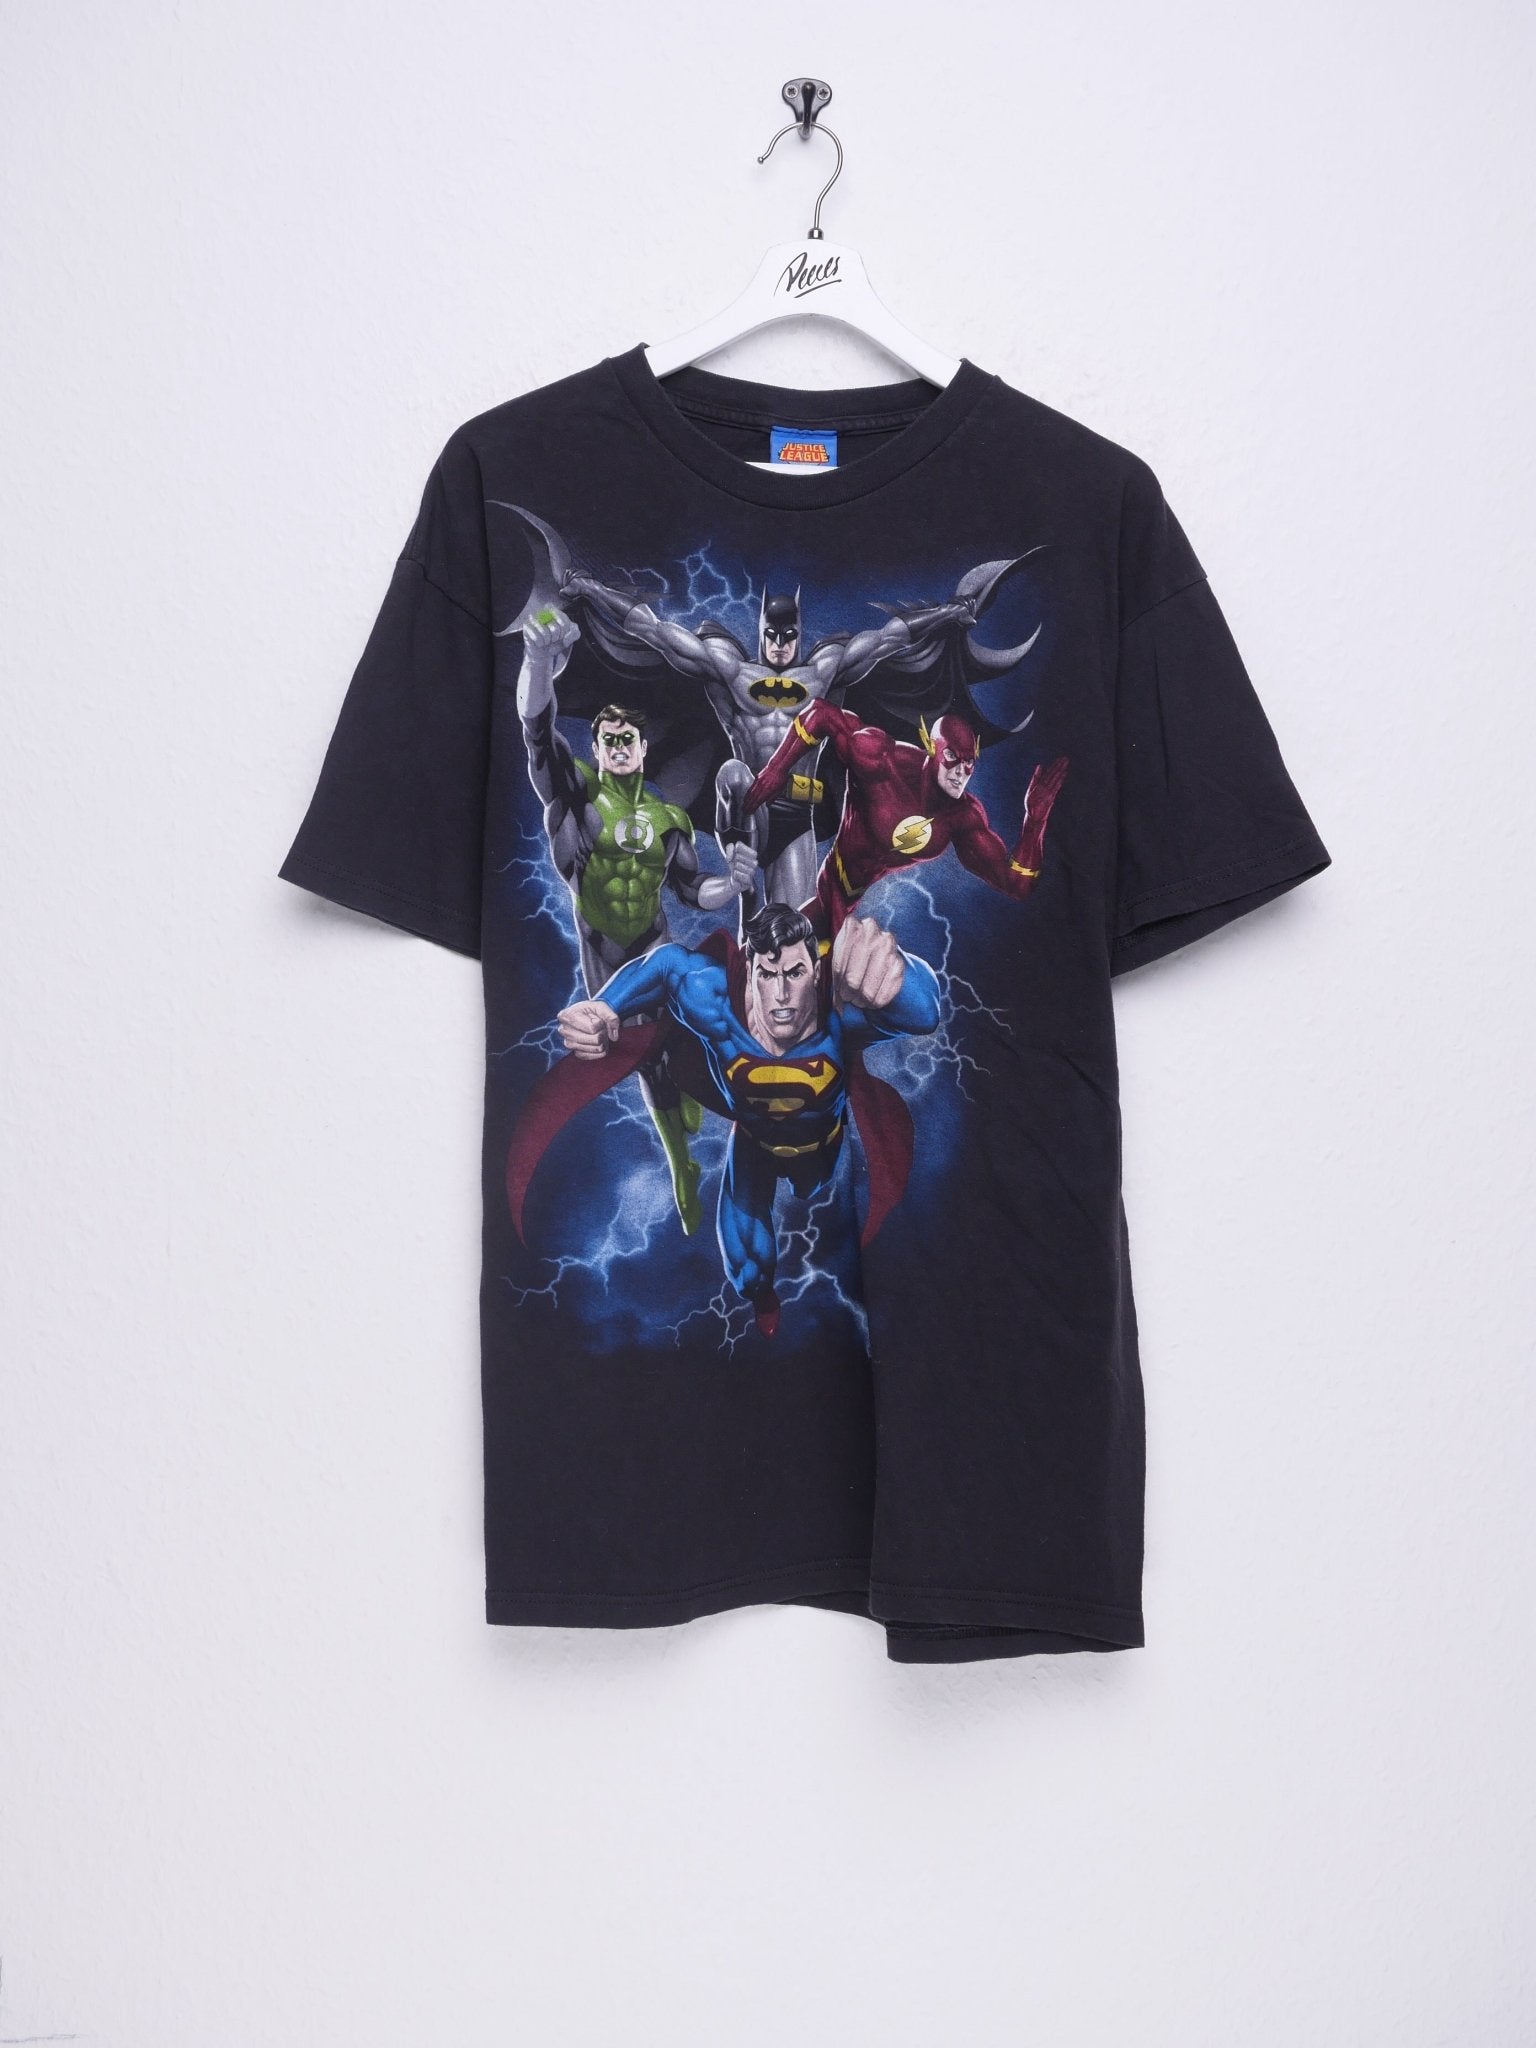 'Justice League' printed Graphic Vintage Shirt - Peeces